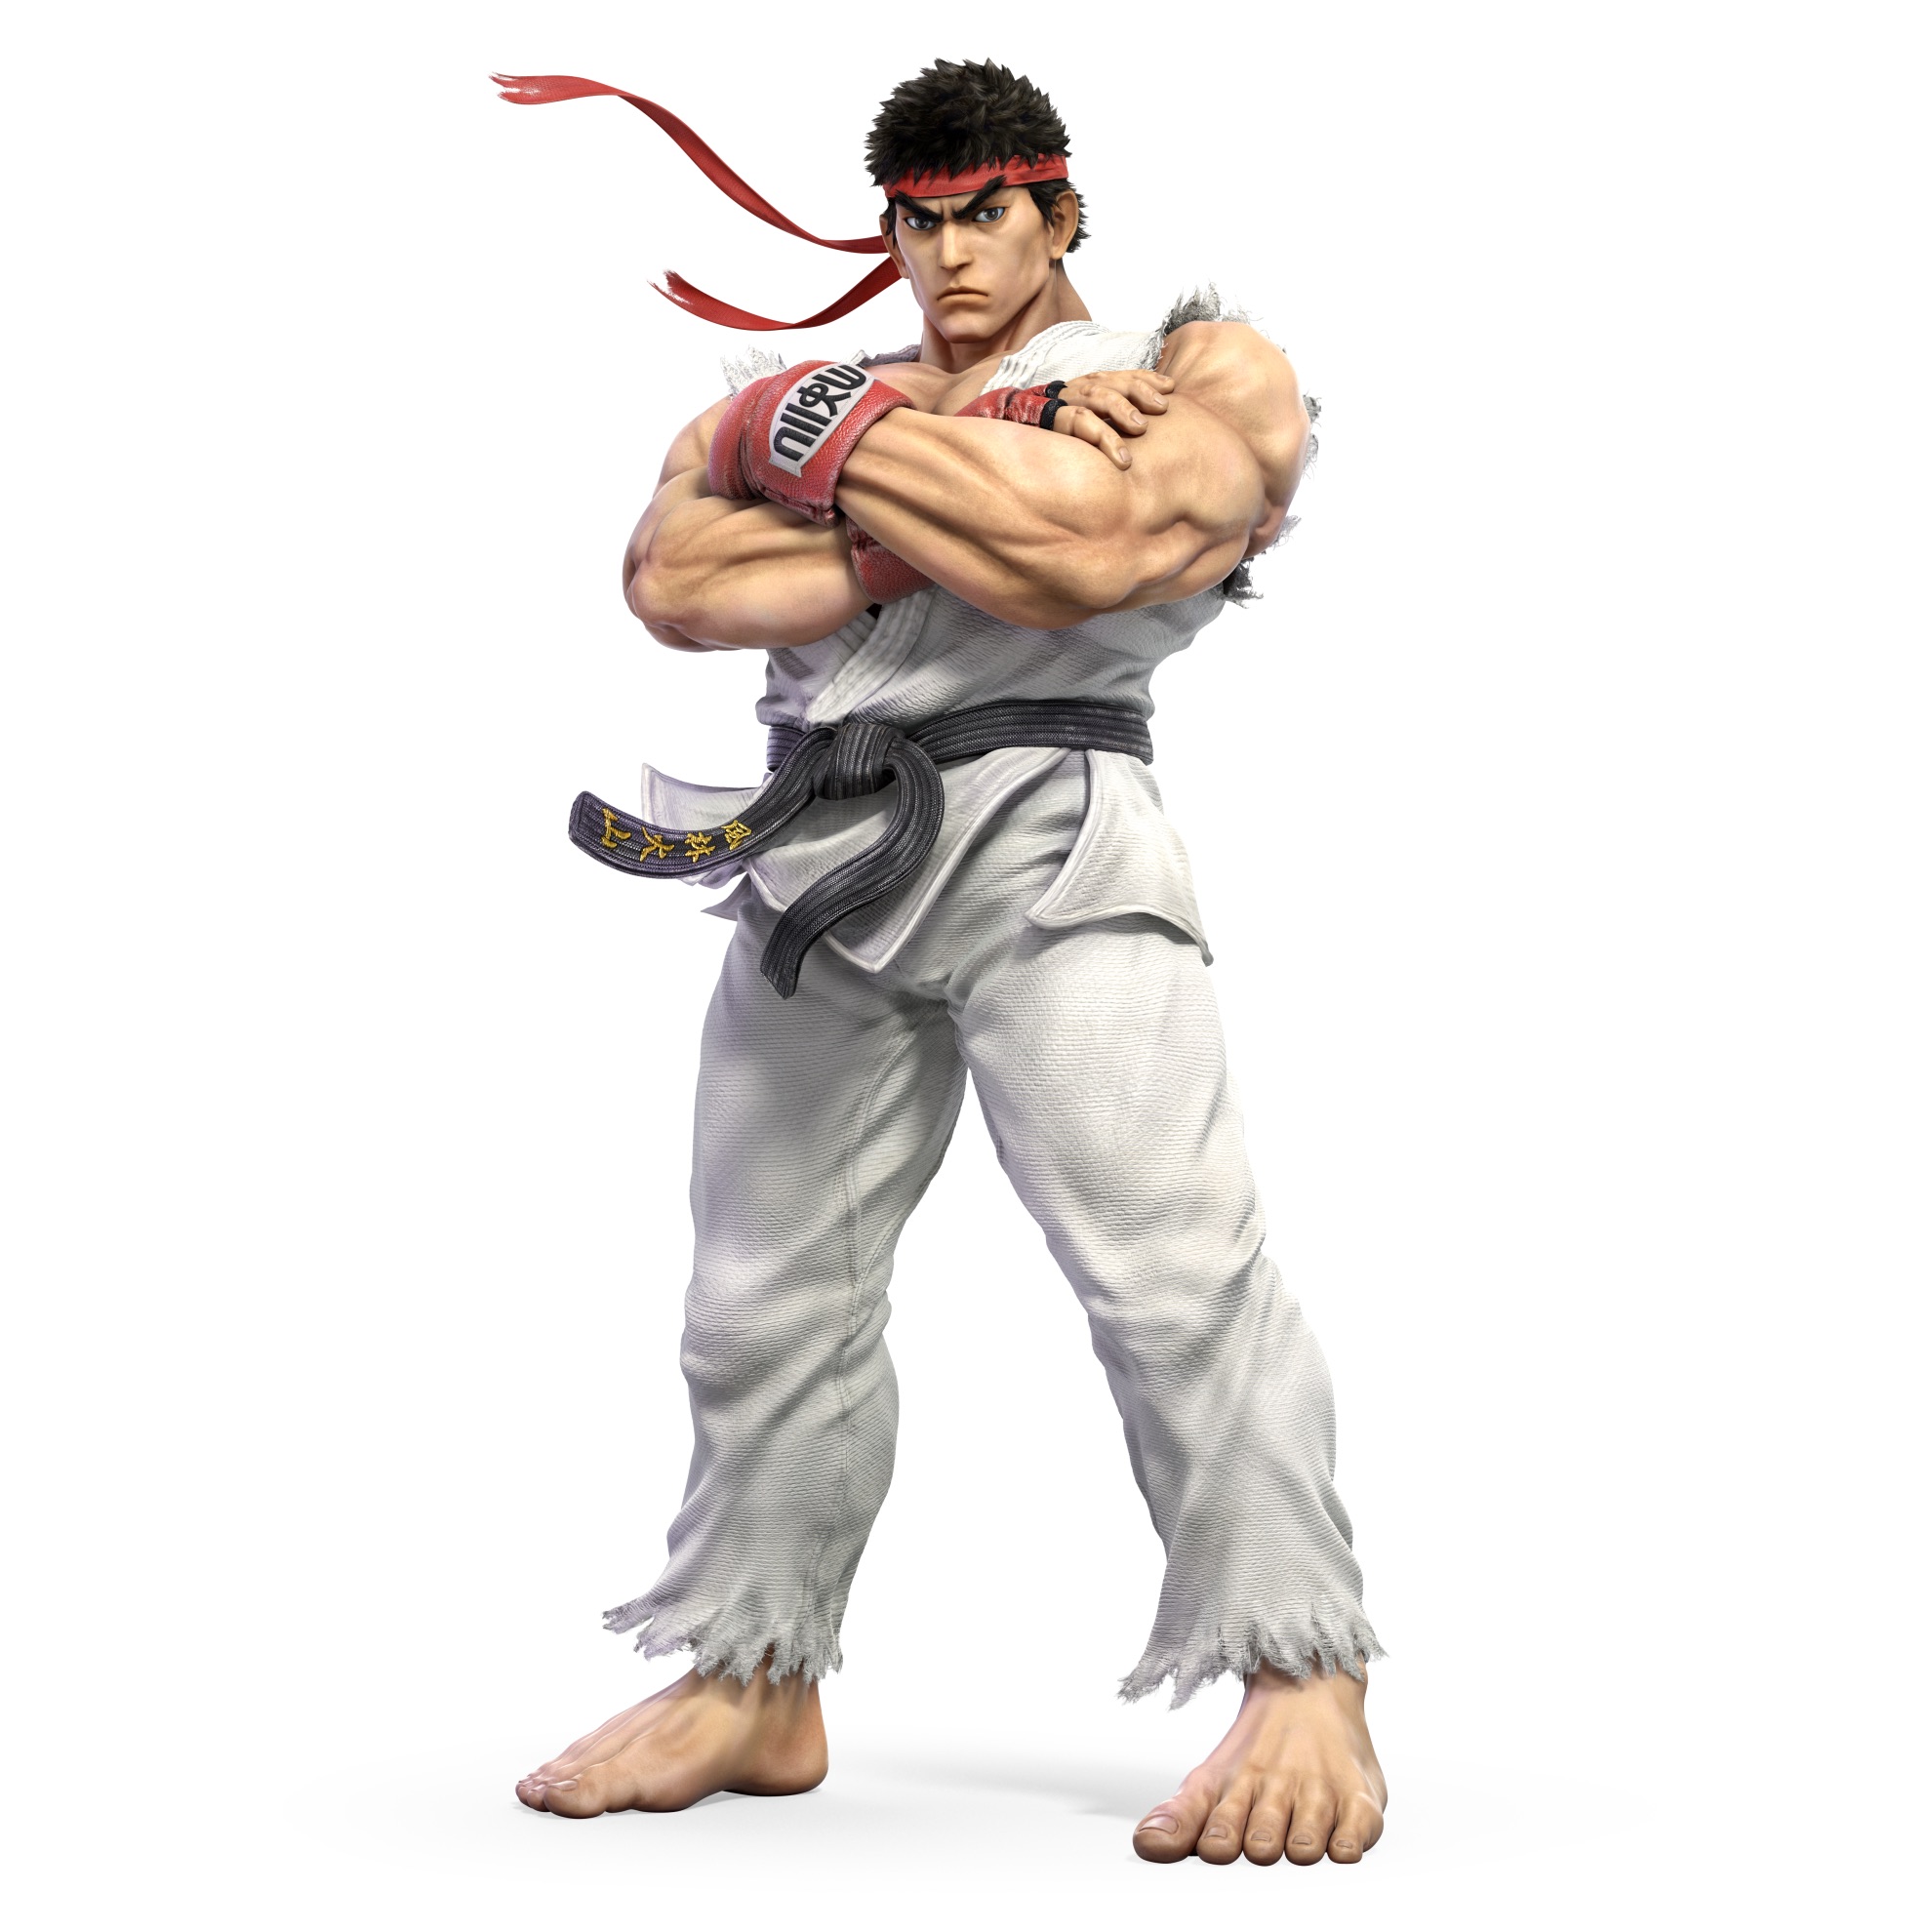 Ryu Super Smash Bros. Ultimate Character Render